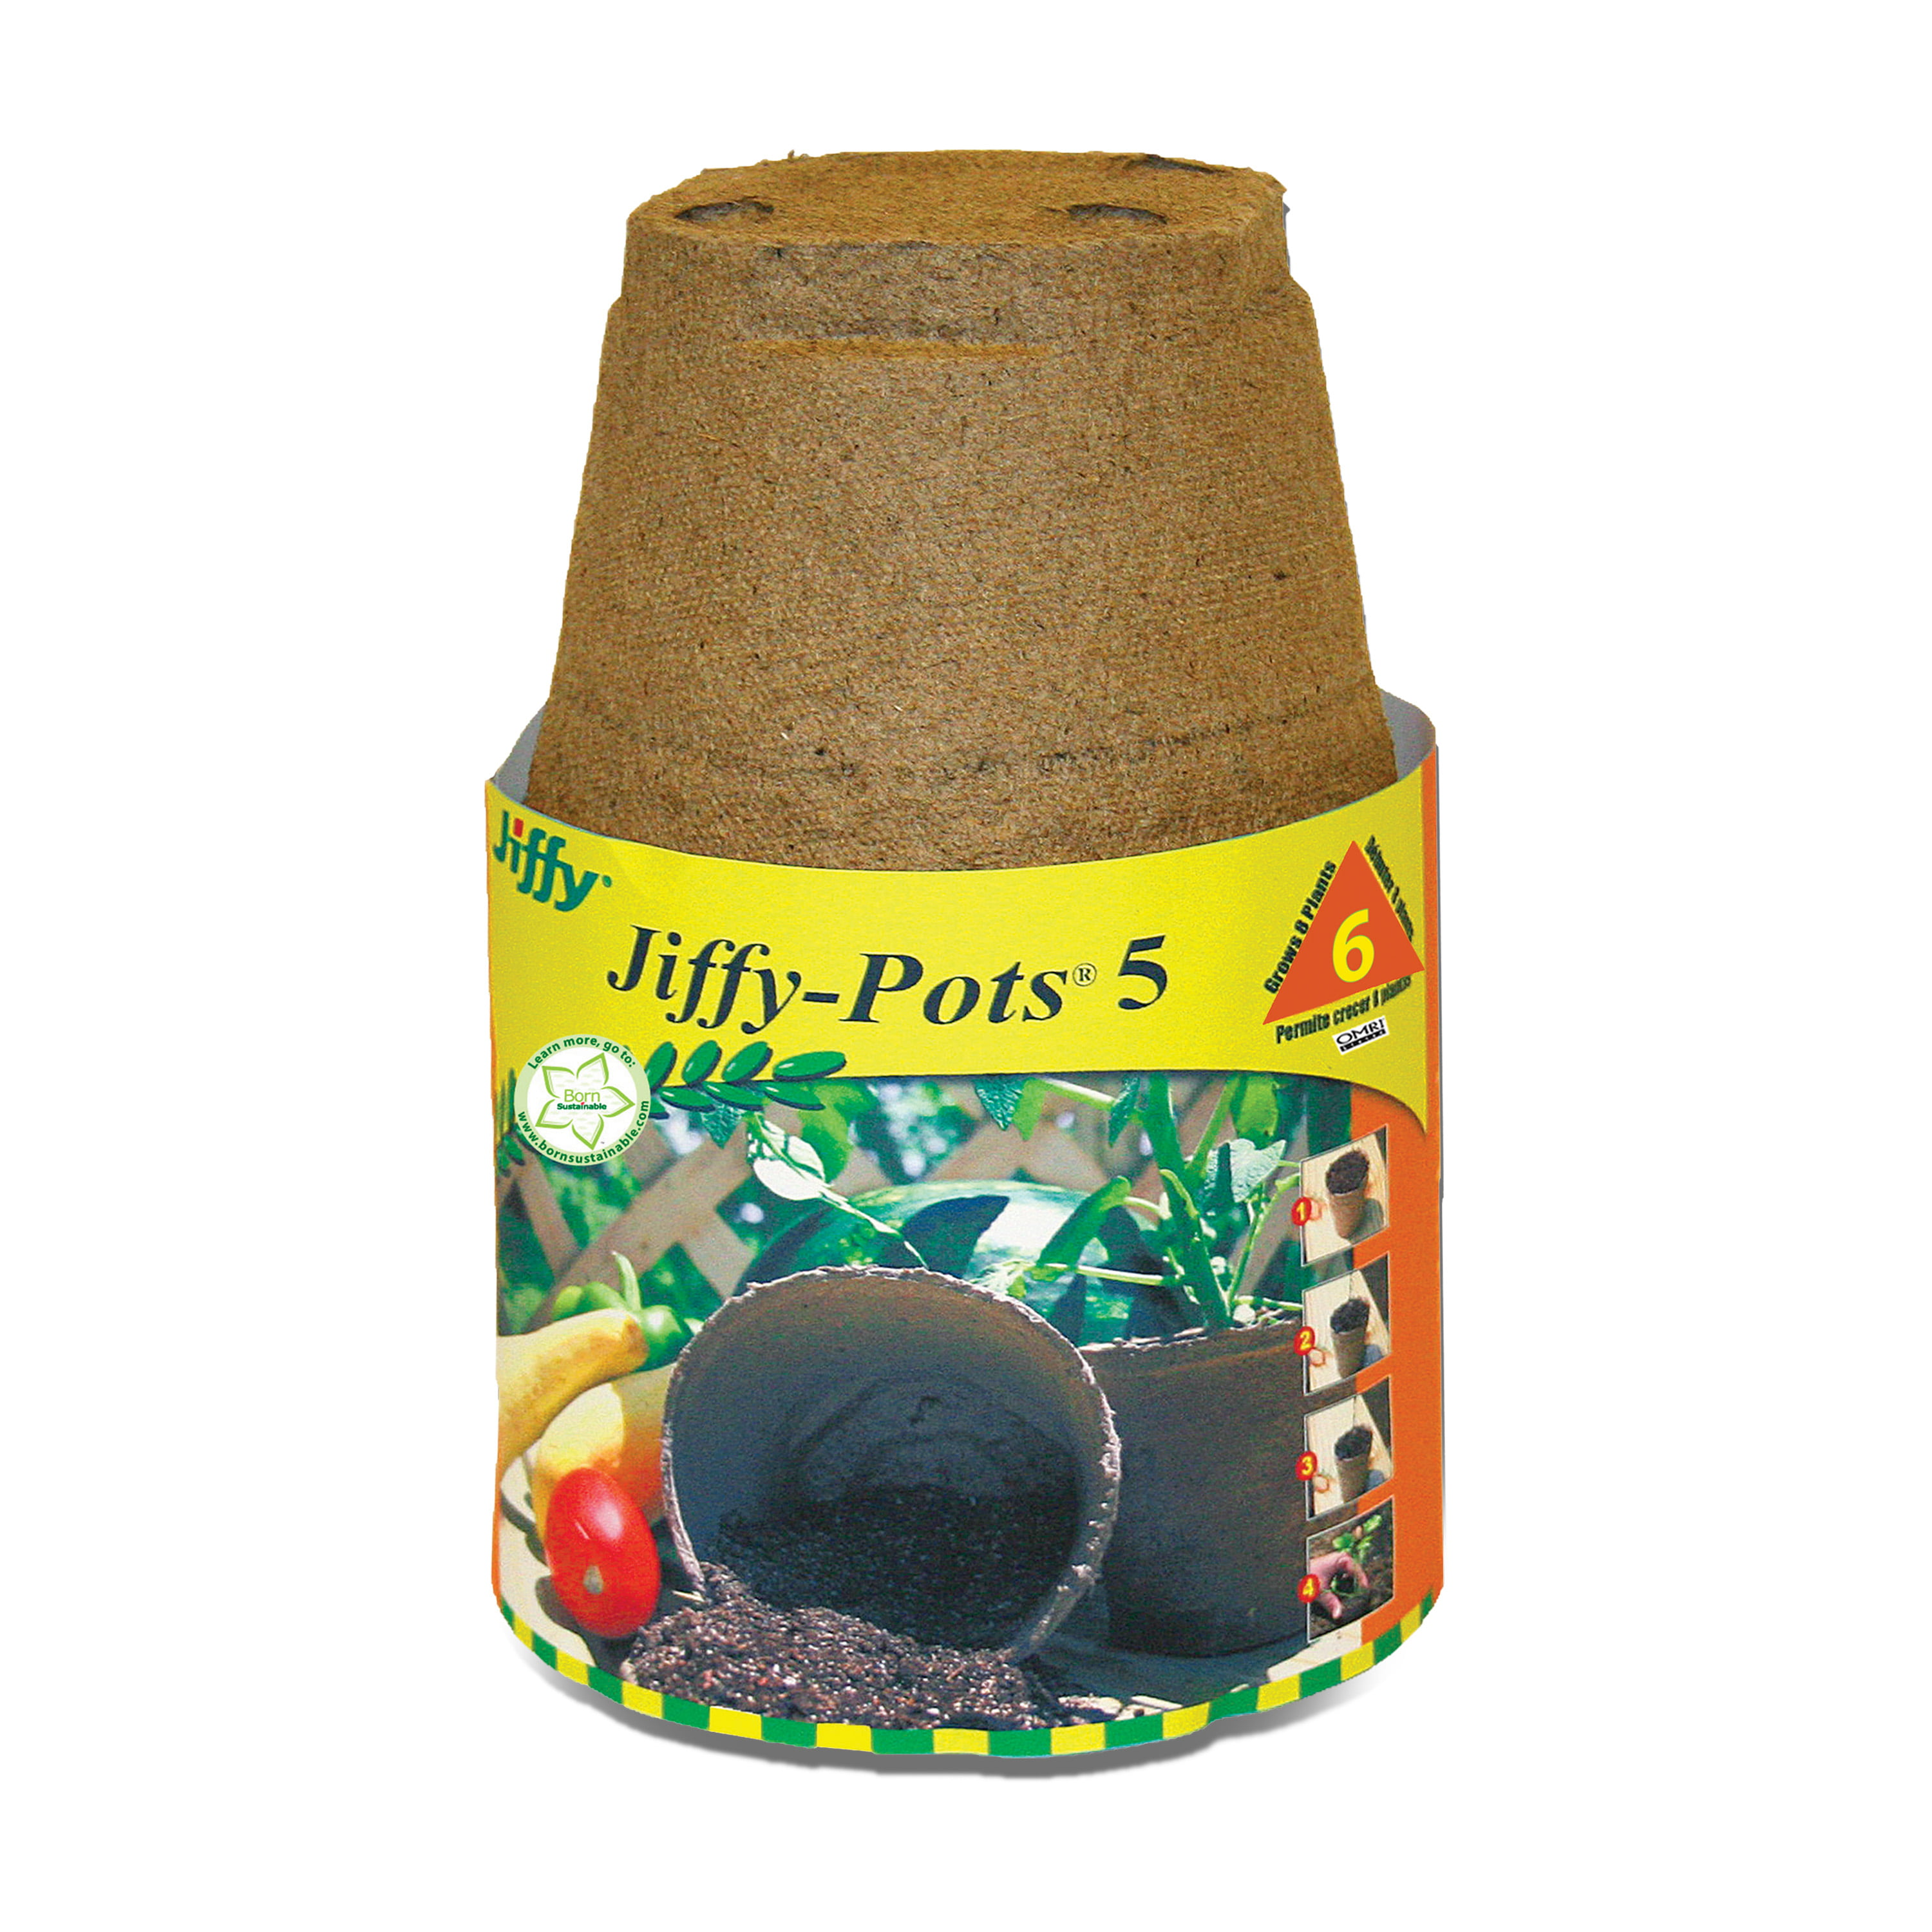 Jiffy Pots 5" Diameter Seed Starting Biodegradable Peat Pots - 6 Pack $2.88